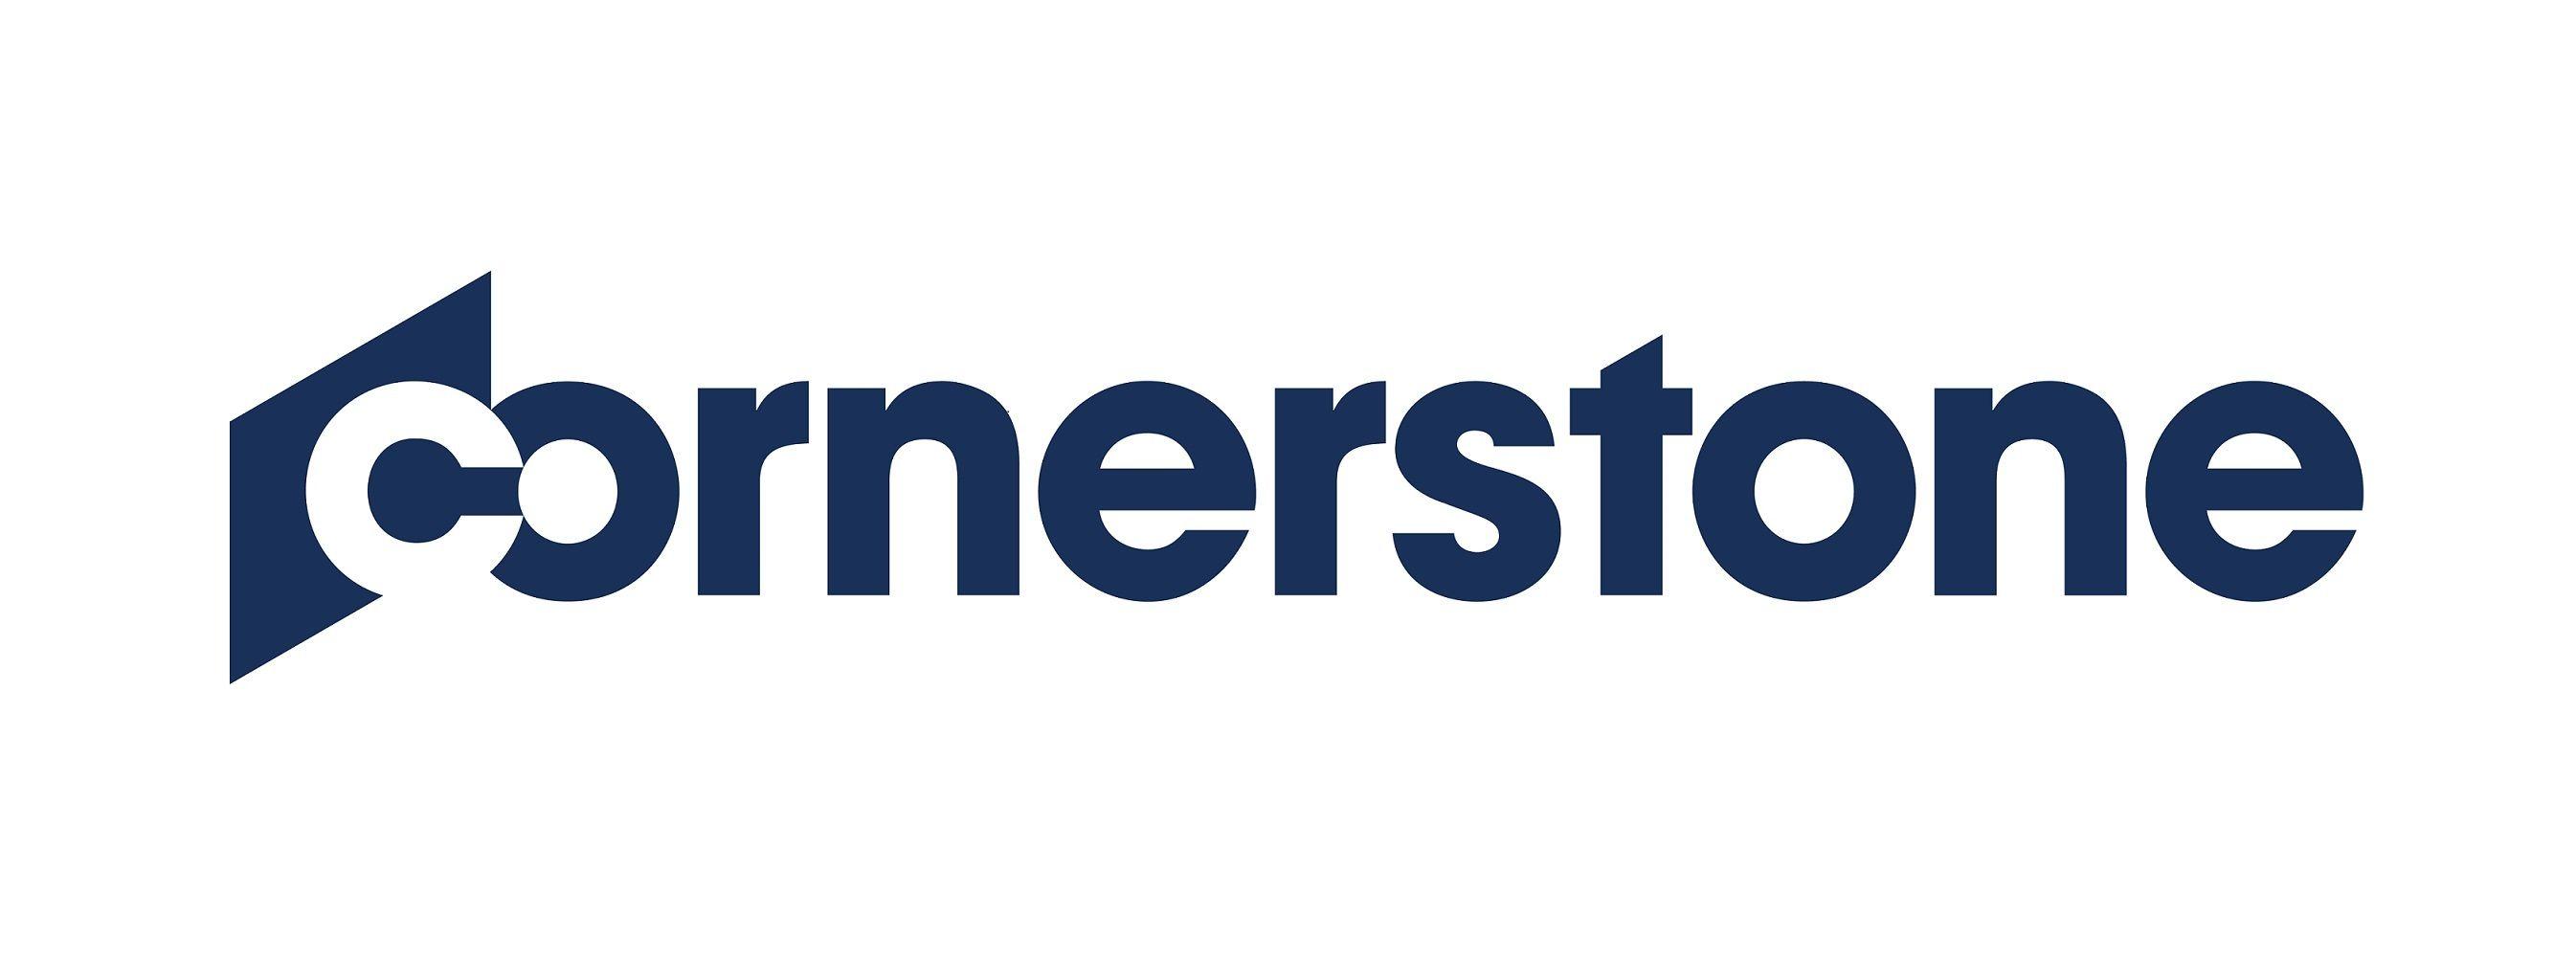 Cornerstone Logo - Cornerstone logo | RealWire RealResource